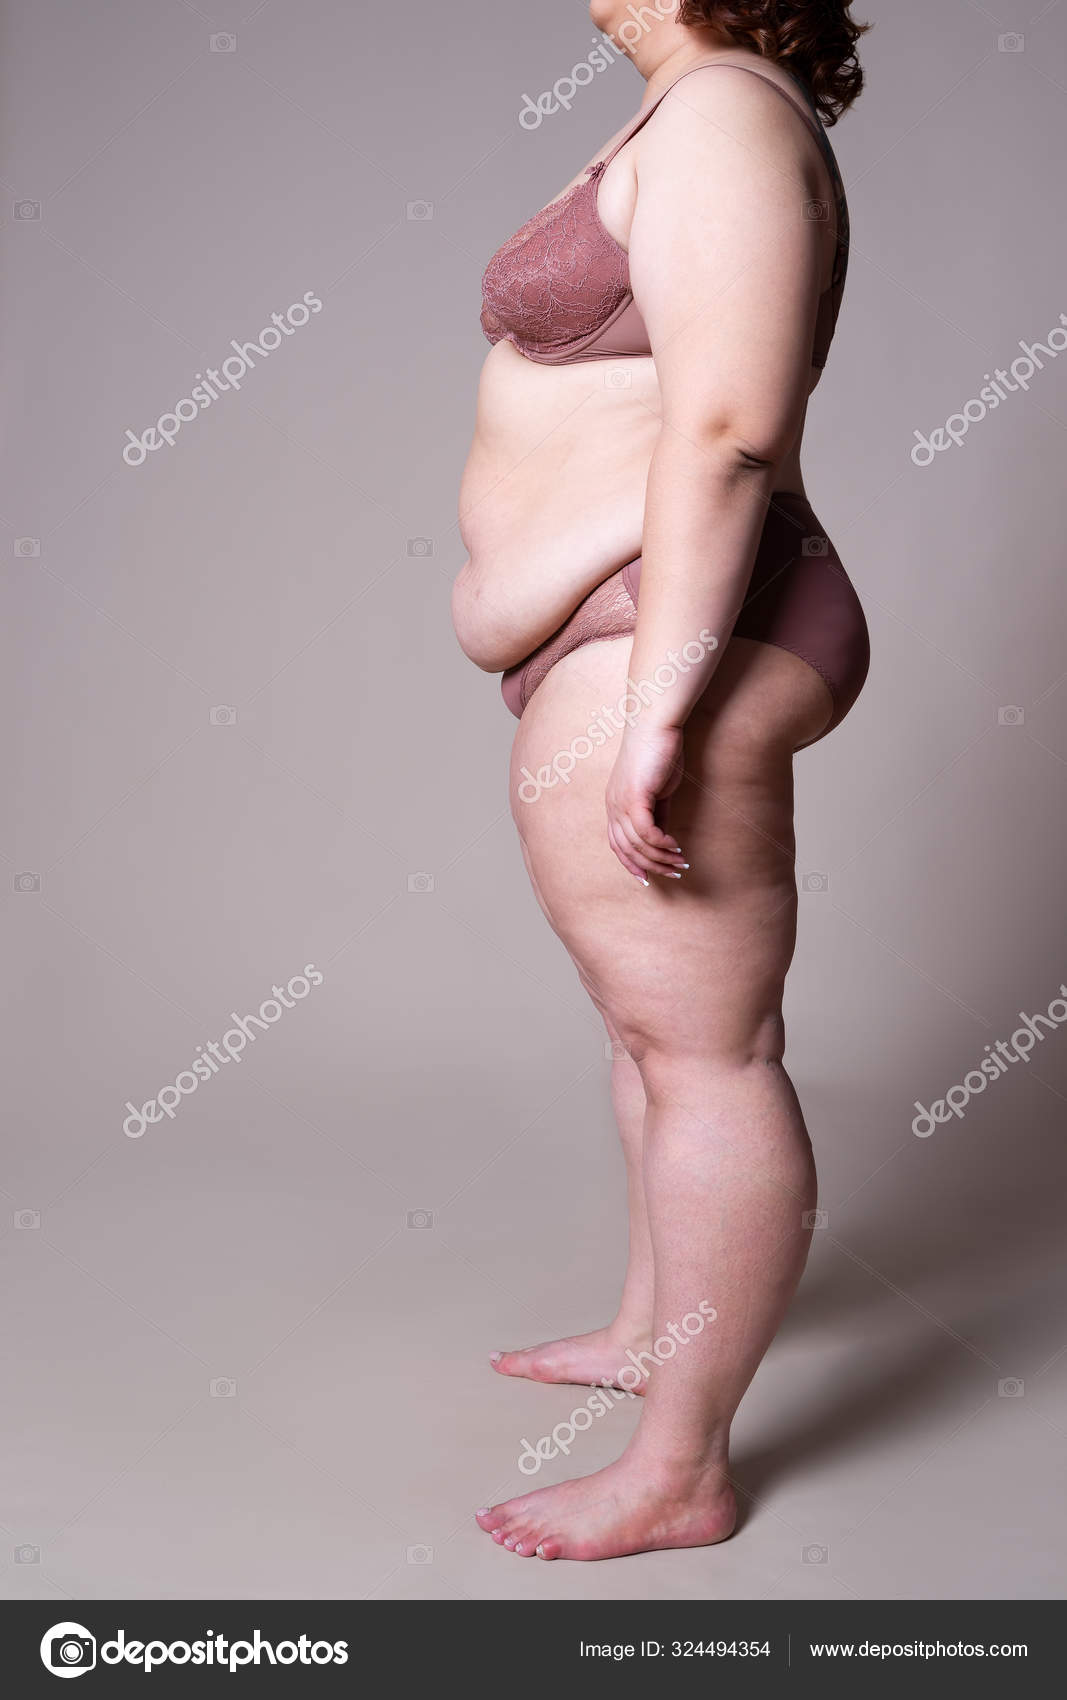 Premium Photo  Cropped photo of overweight woman in underwear